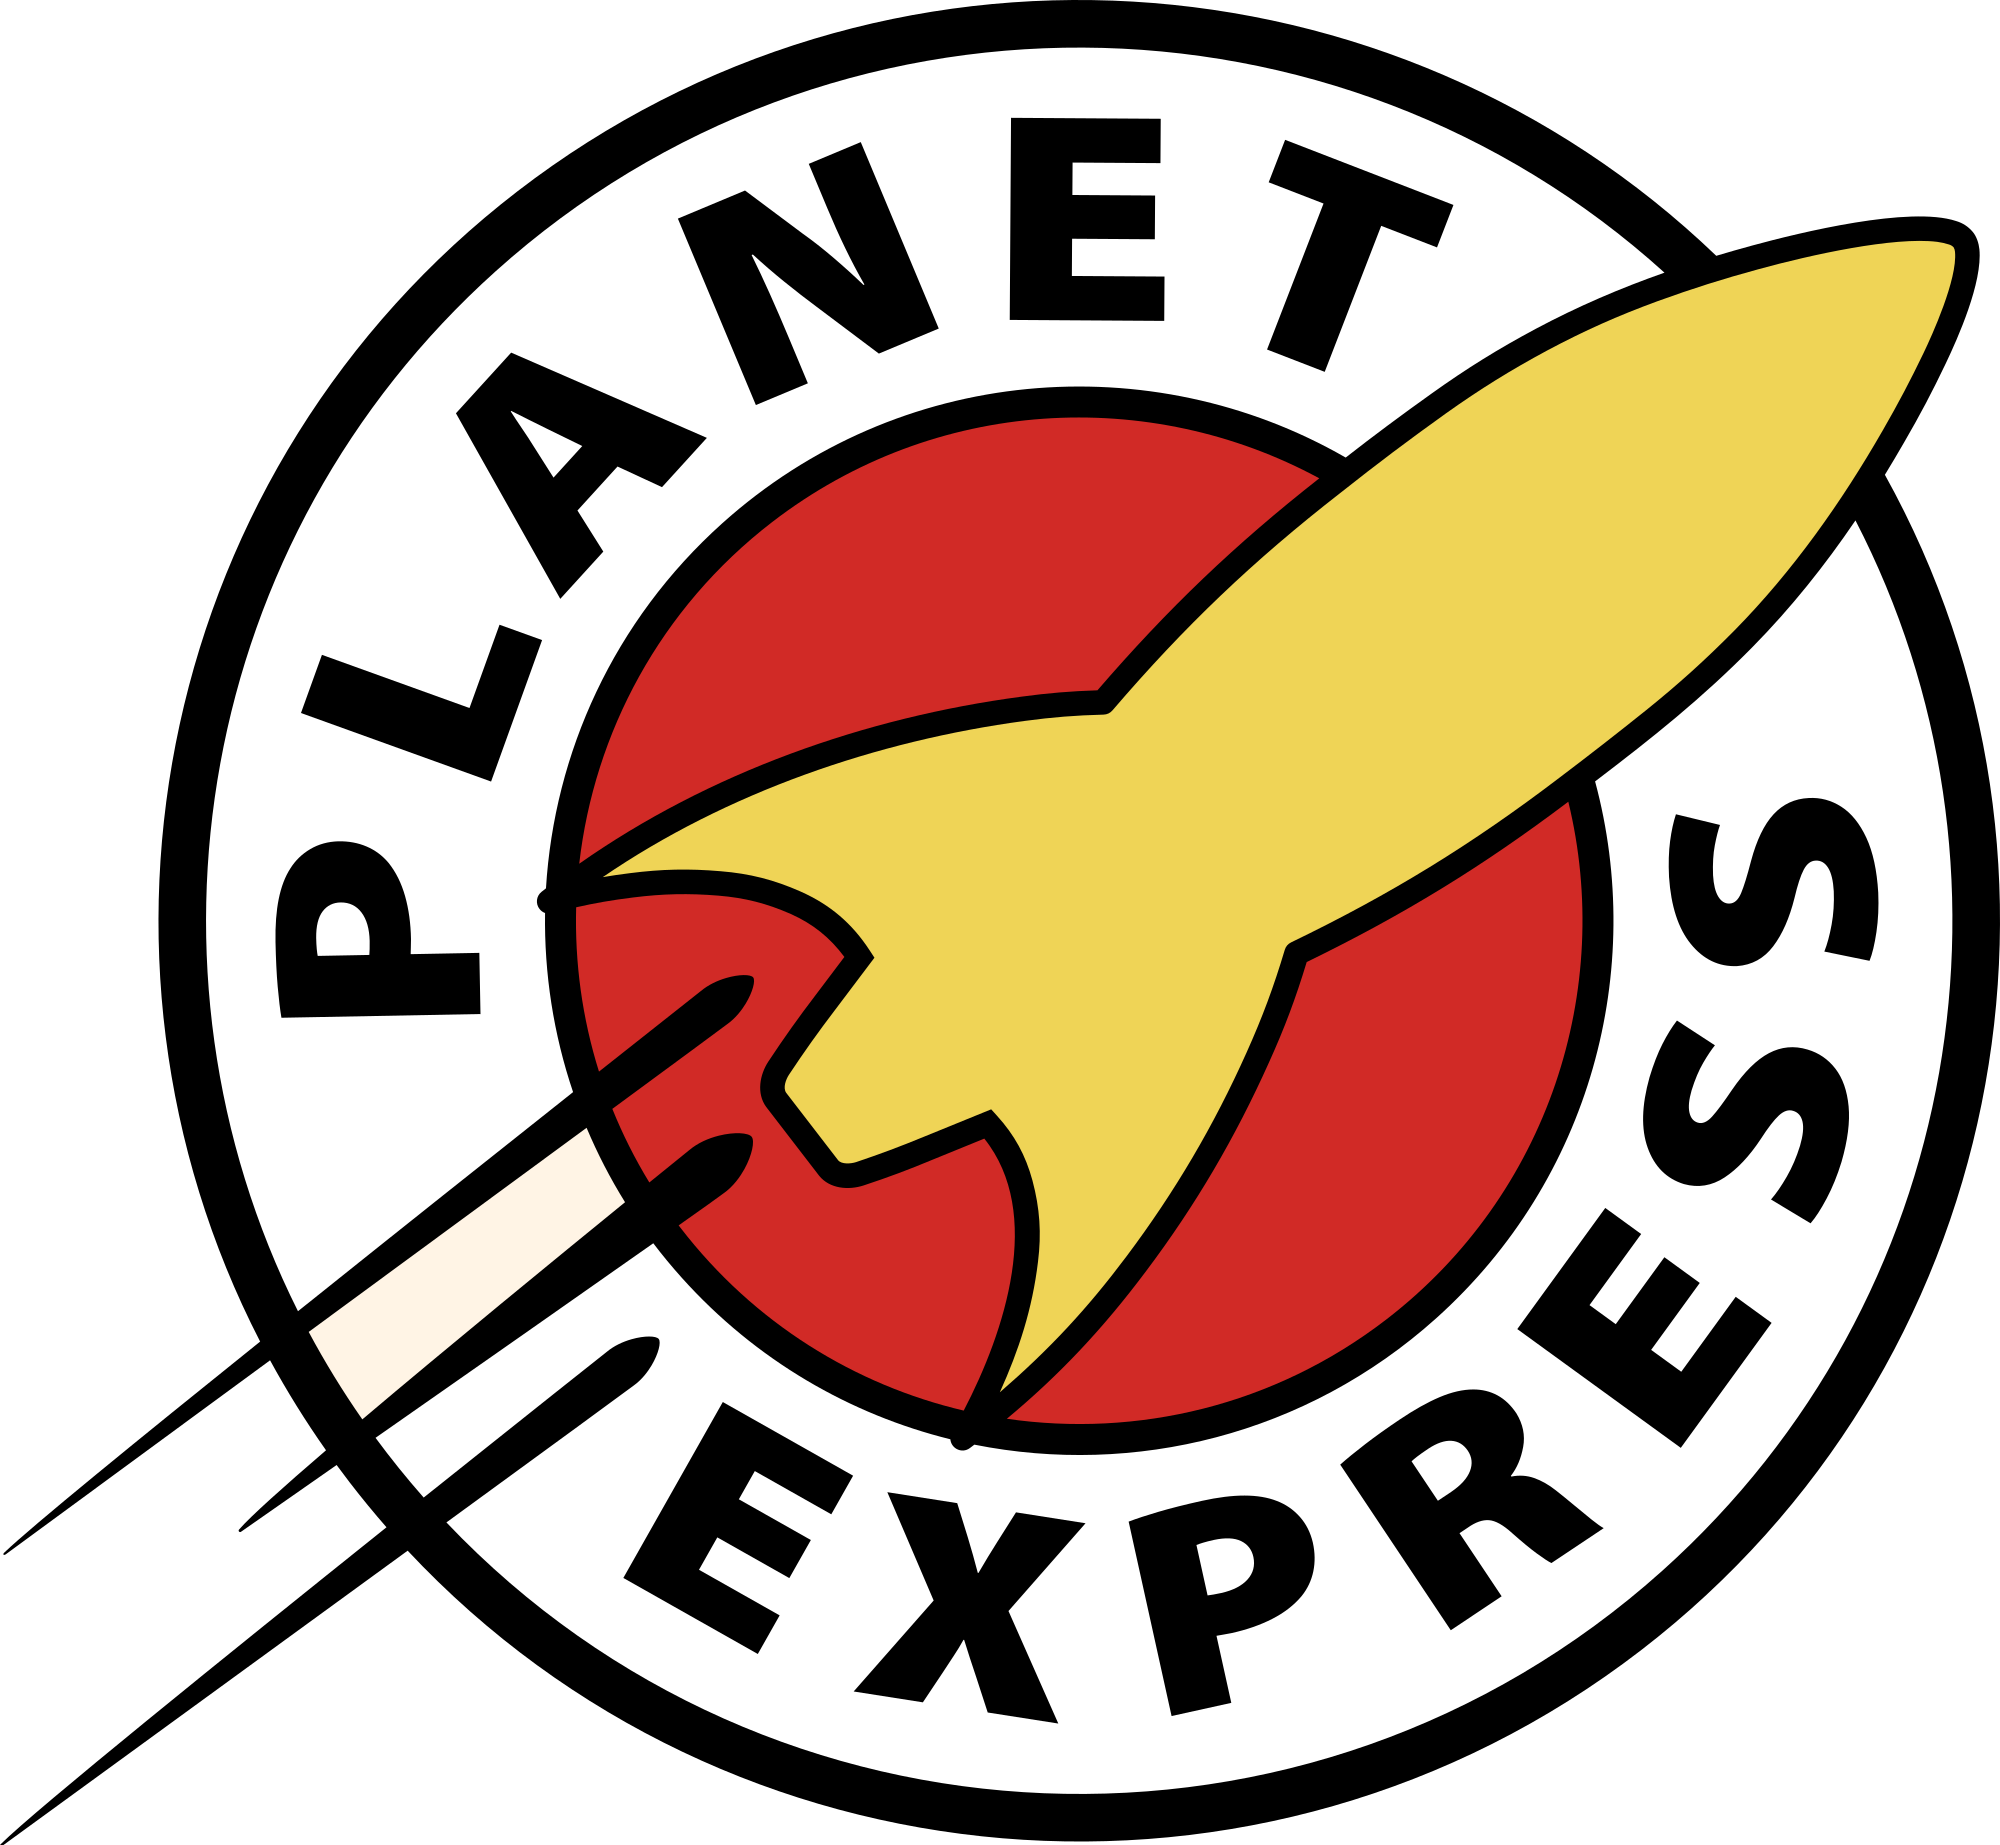 Futurama logo PNG image haute qualité